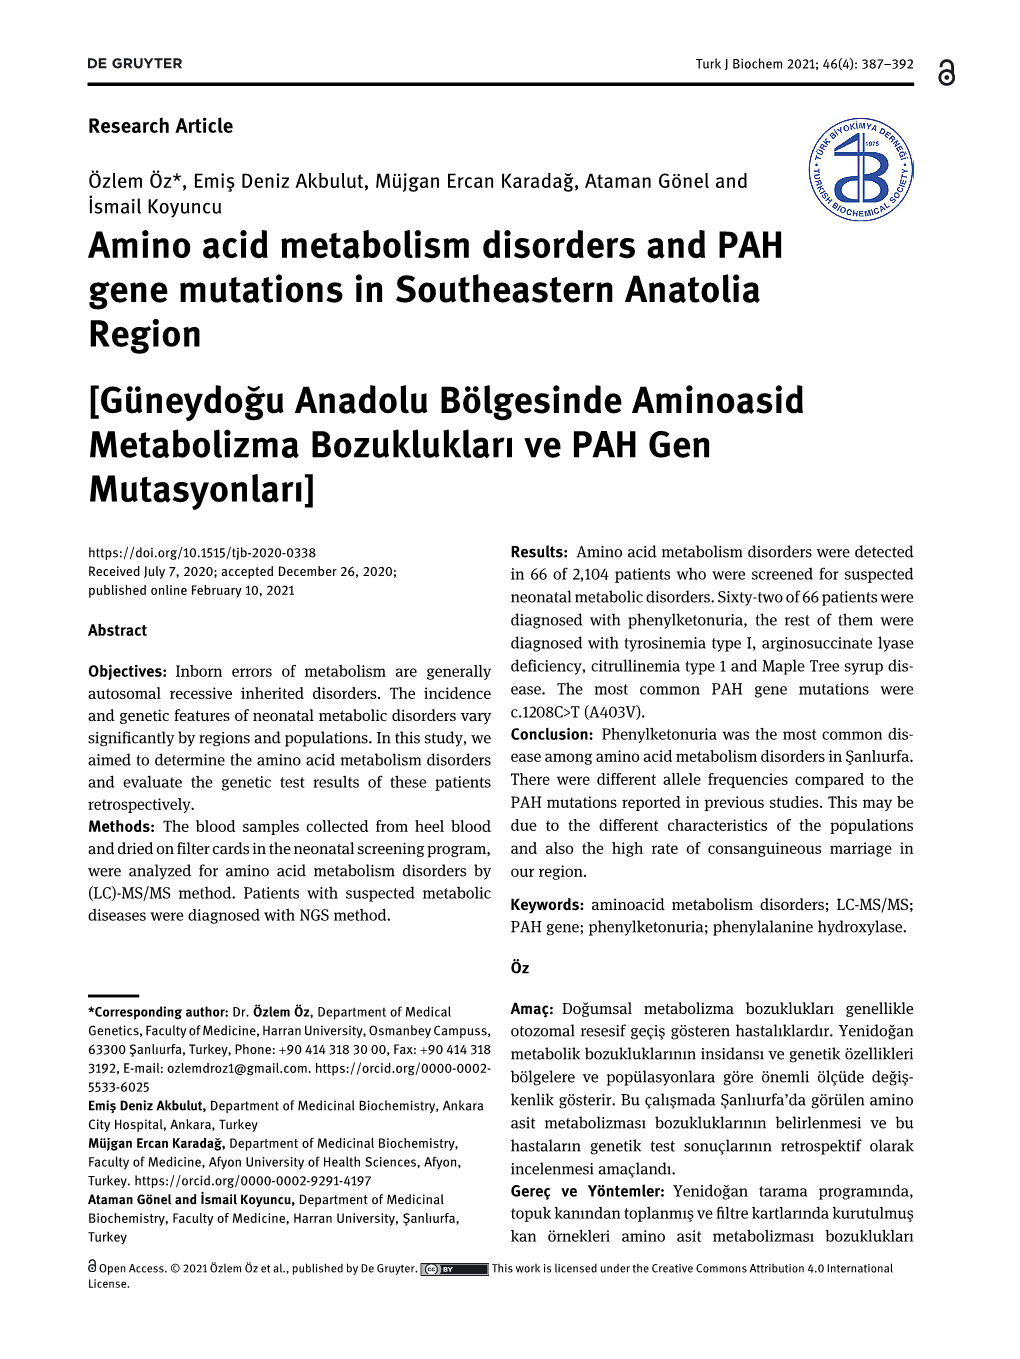 Amino Acid Metabolism Disorders and PAH Gene Mutations In